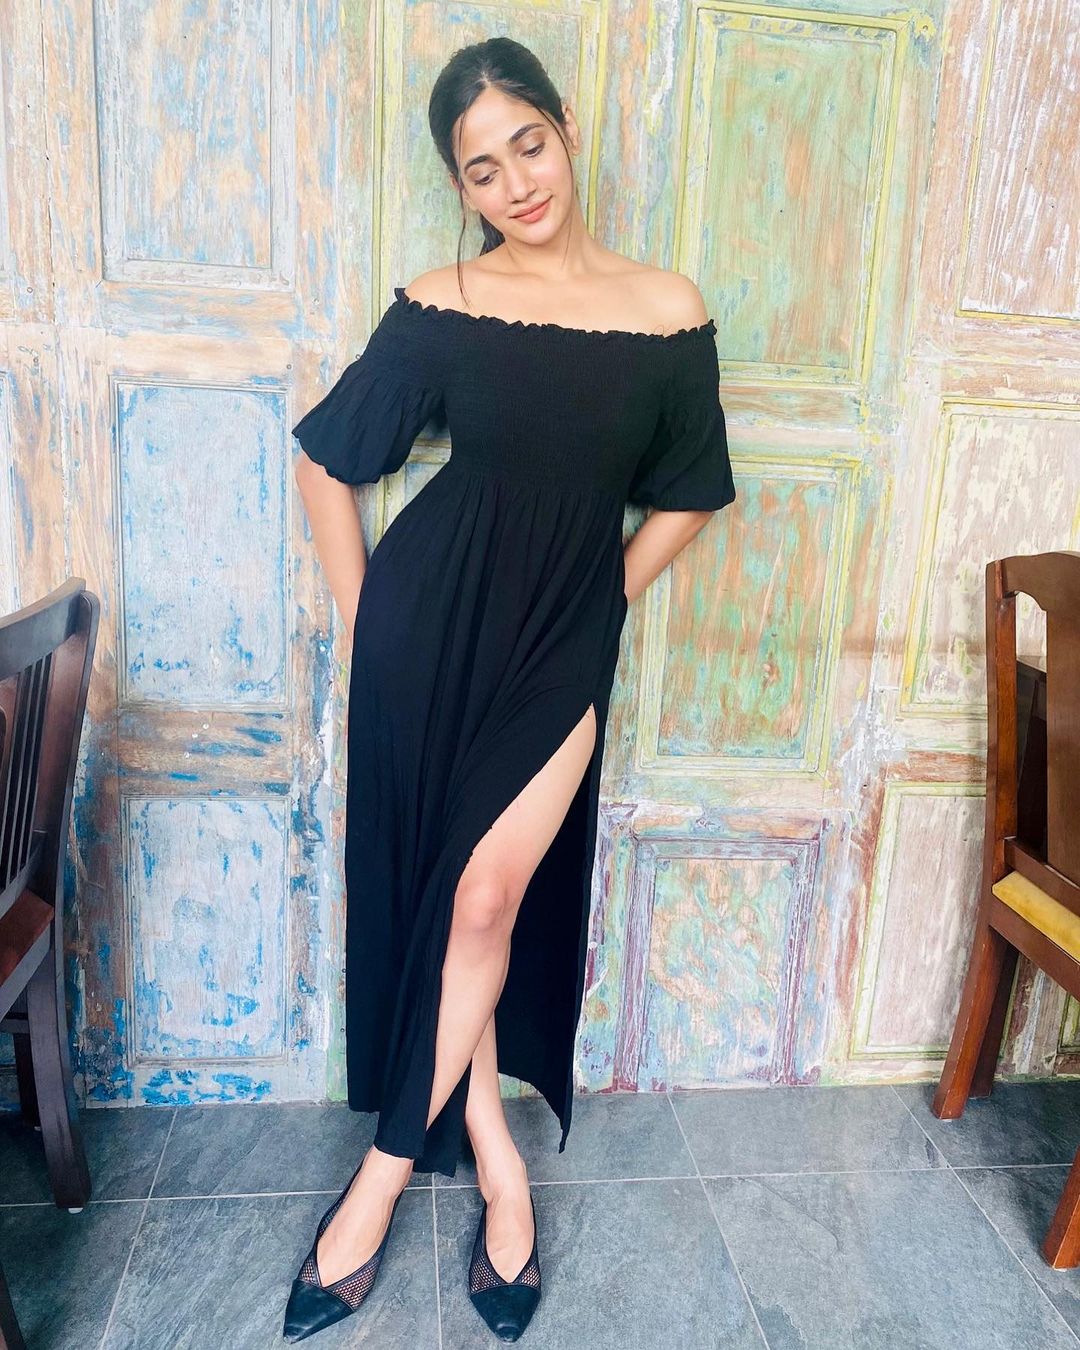 losliya hot photos getting viral on social media in black modern dress